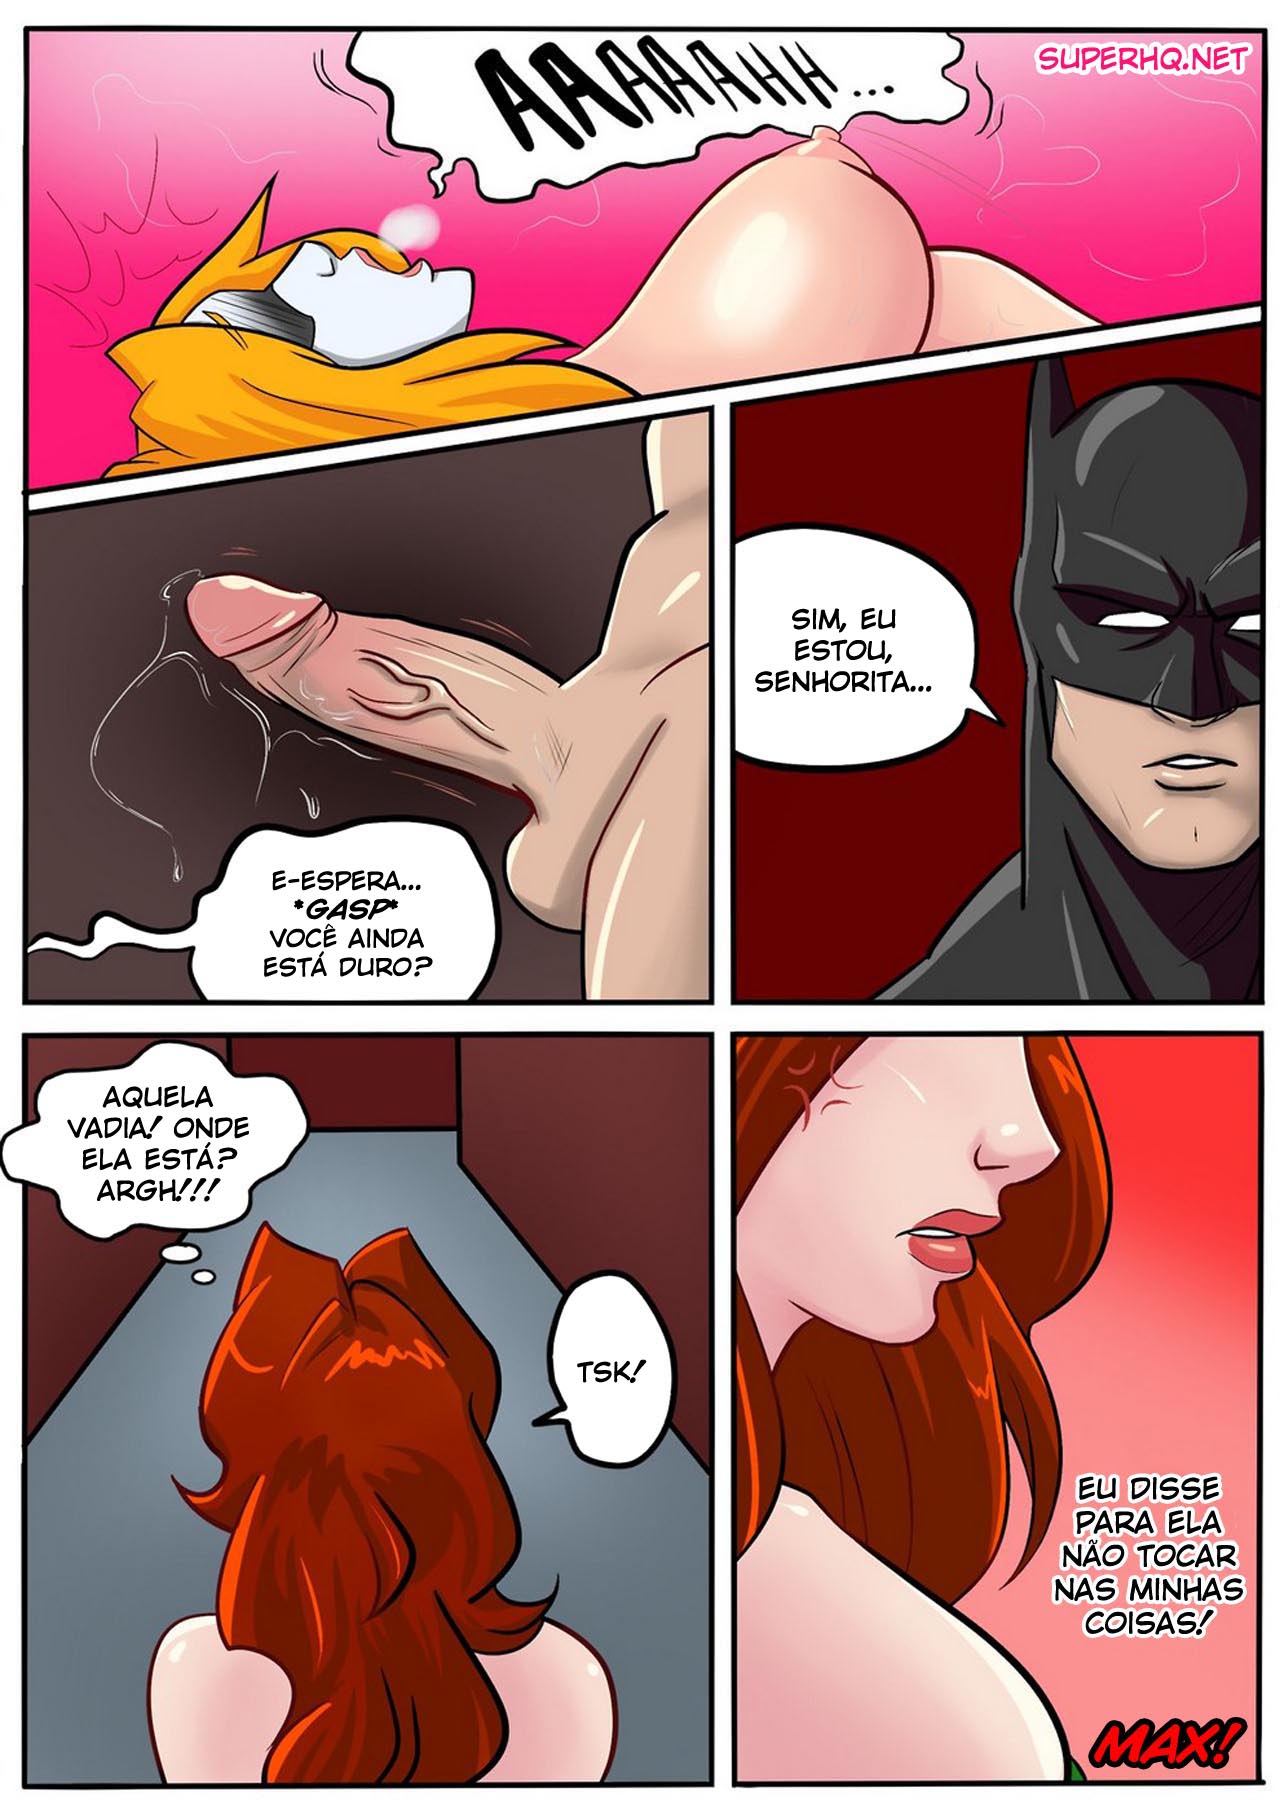 Harley Quinn And Batman - The Sexy Jokeâ€“ Batman vs Harley Quinn Â» 25